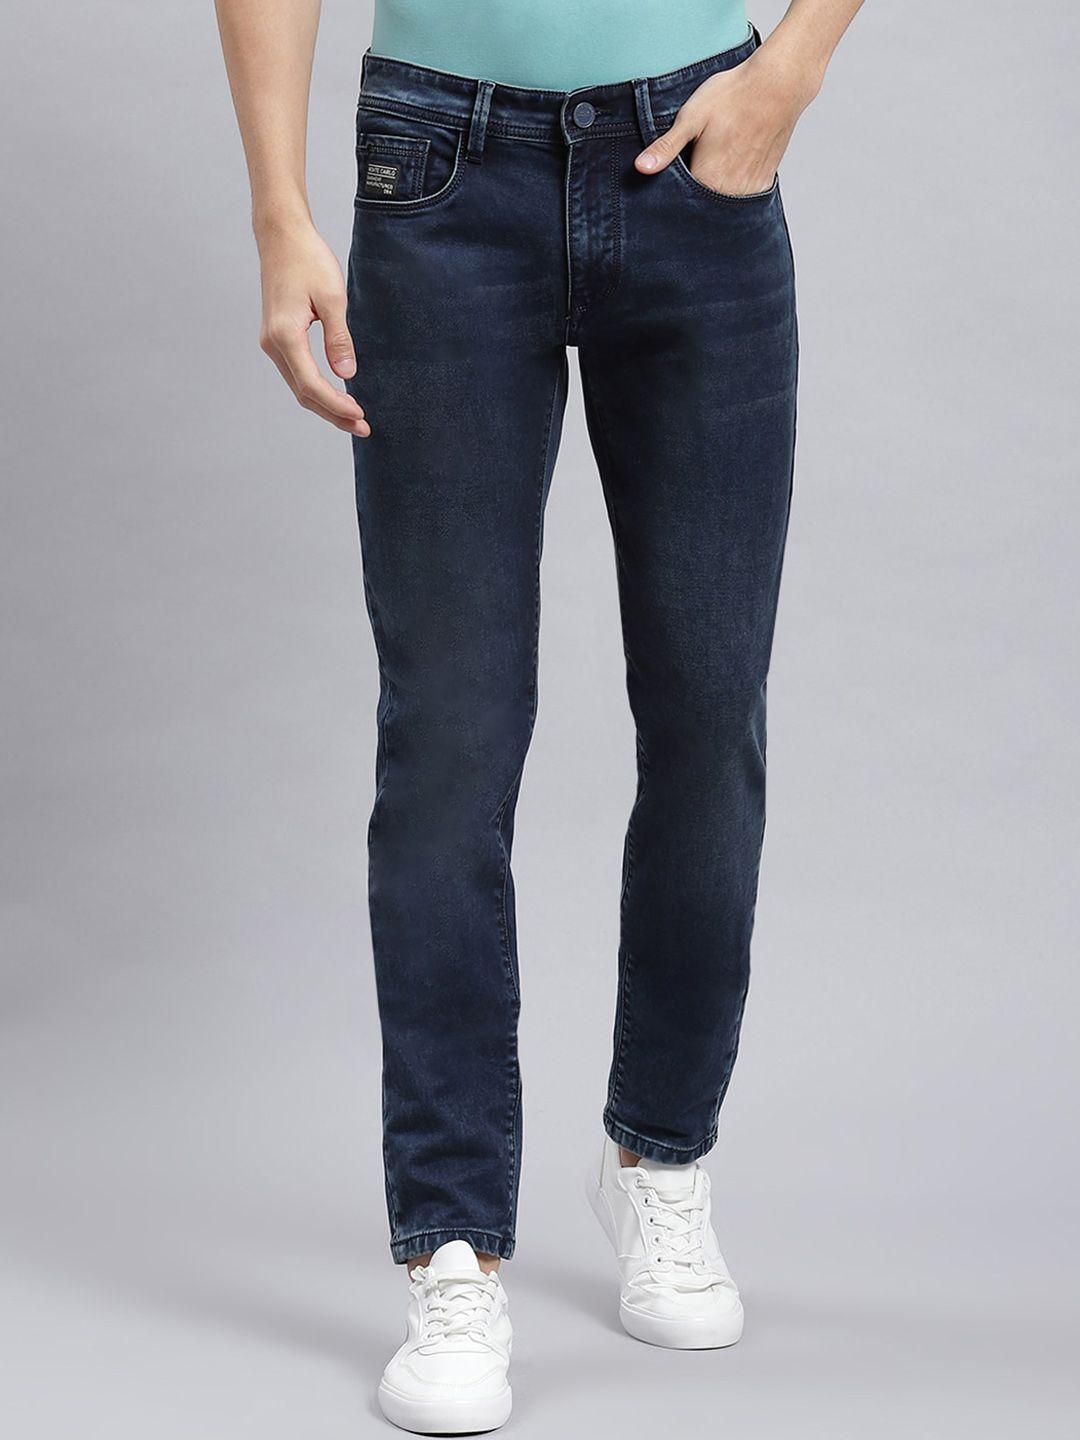 monte-carlo-men-smart-mid-rise-skinny-fit-jeans